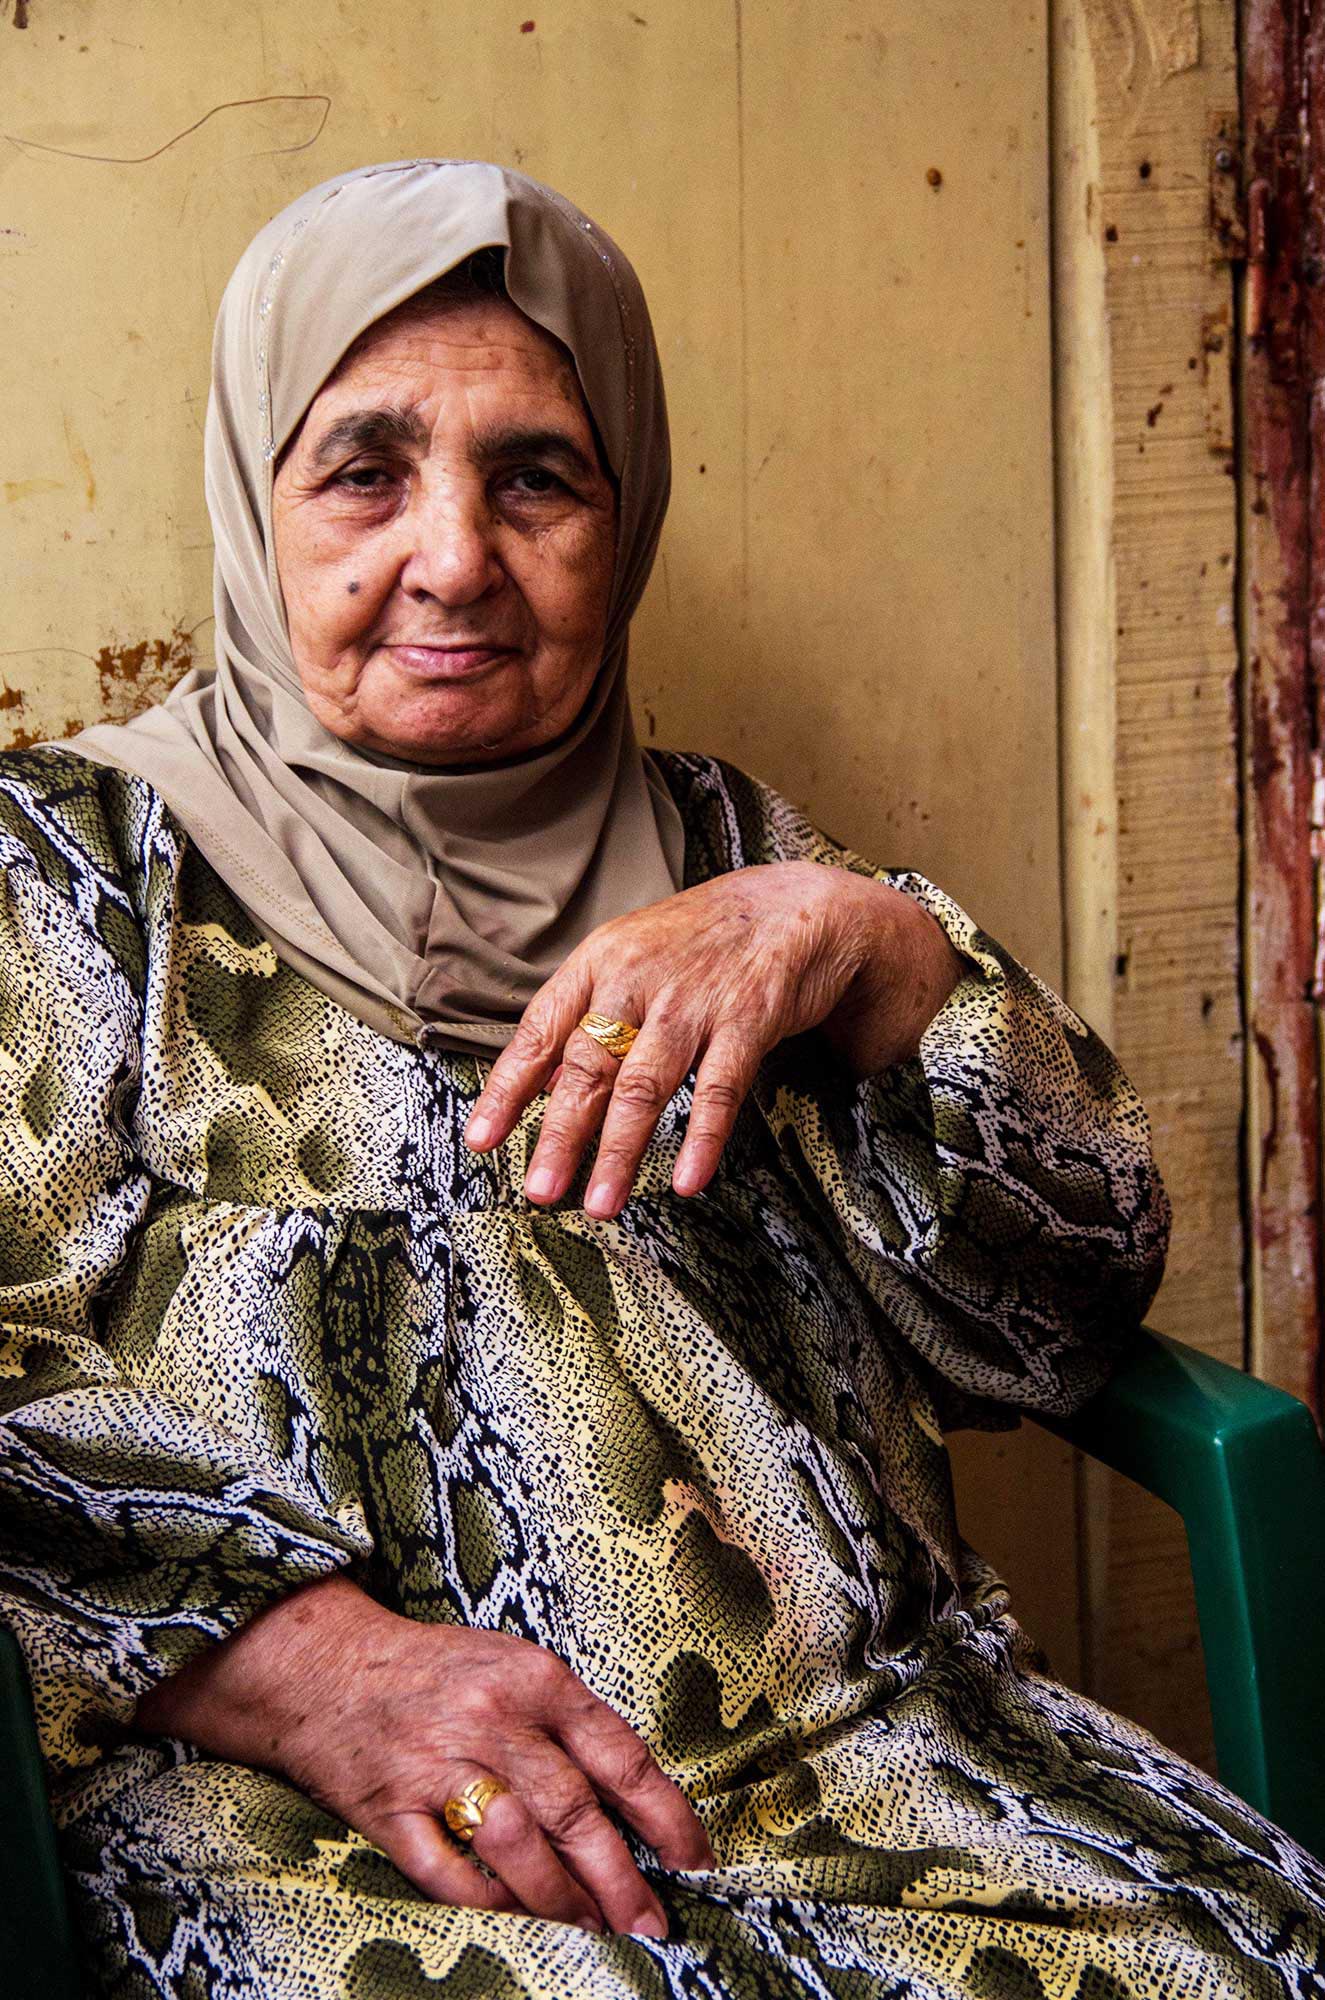 Palestinian refugee woman in Lebanon.